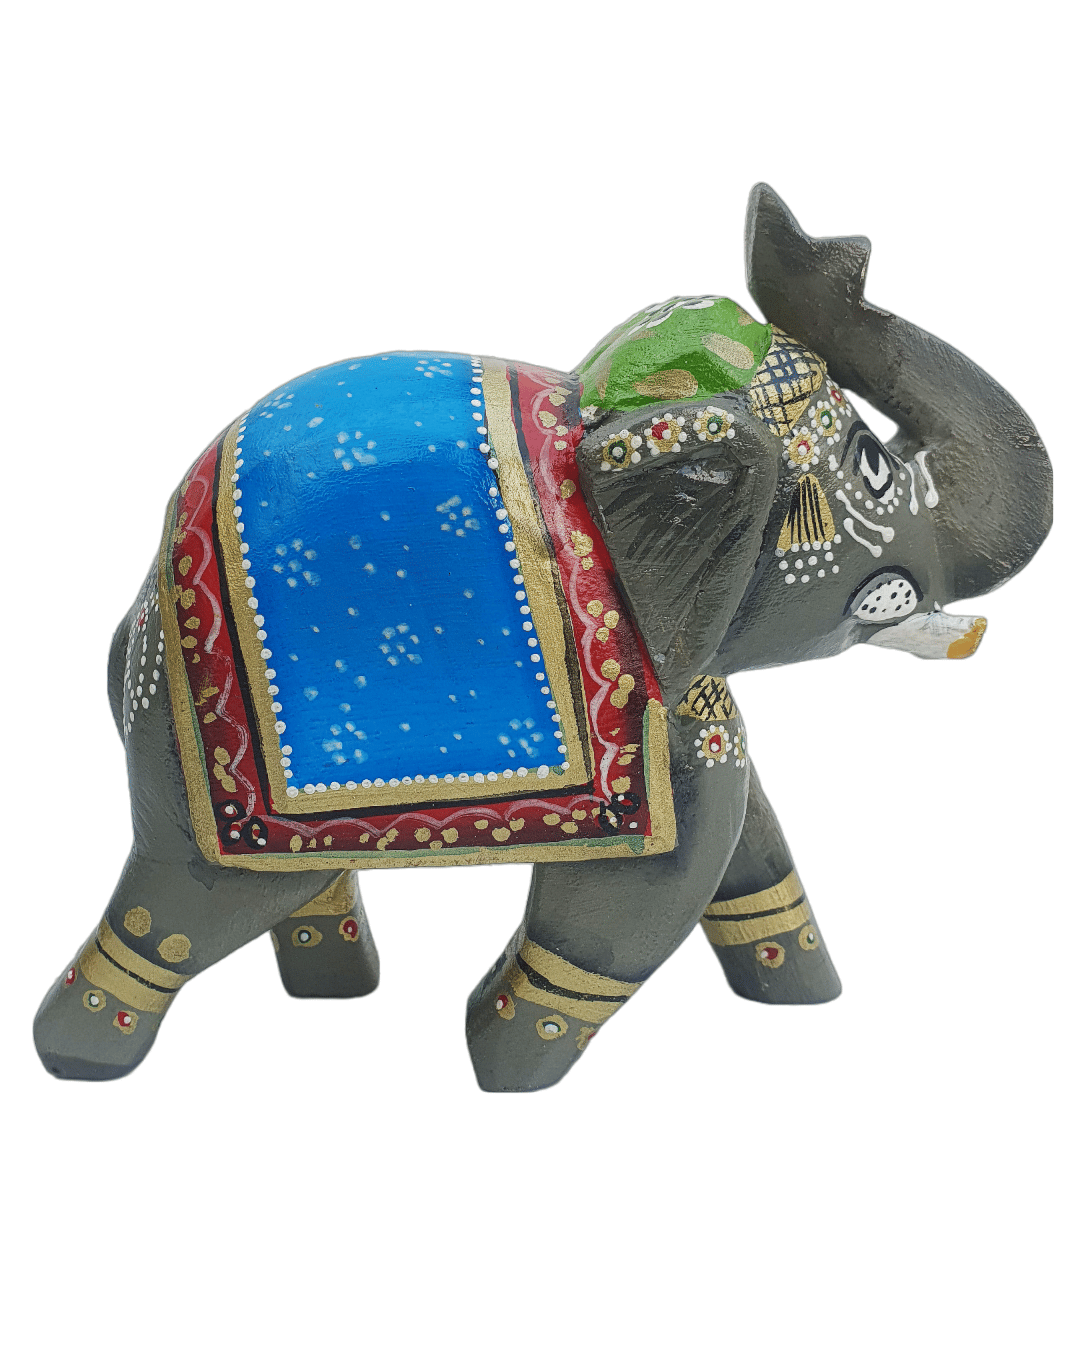 Rajasthan Handicraft Wooden Elephant Handpainted